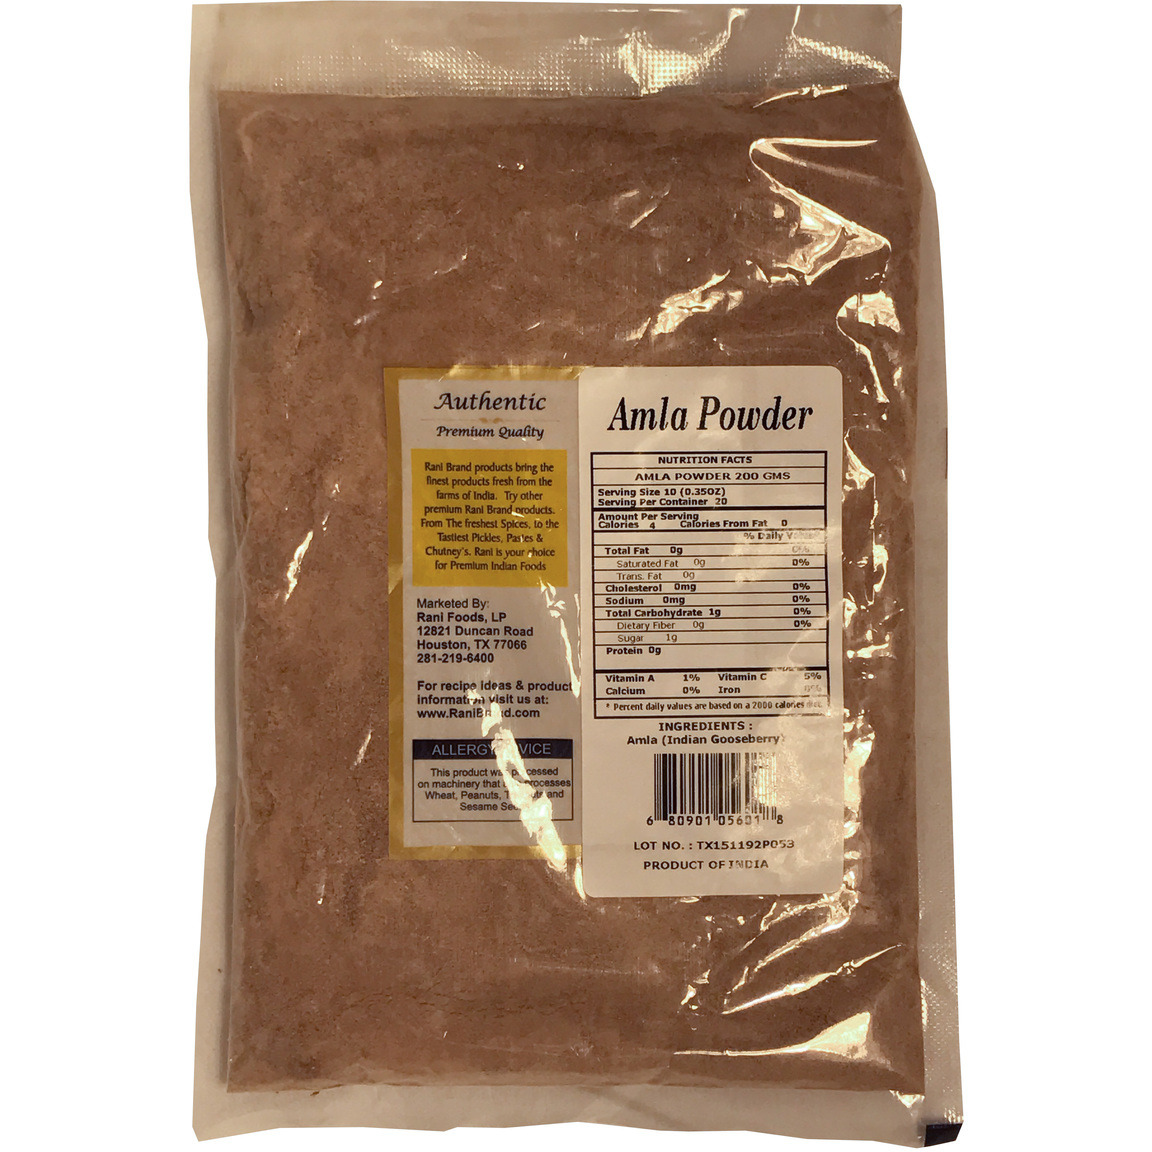 Rani Amla Powder (Indian Gooseberry) 3.5oz (100g) ~ All Natural, Indian Origin | No Color | Gluten Friendly | Vegan | NON-GMO | No Salt or fillers